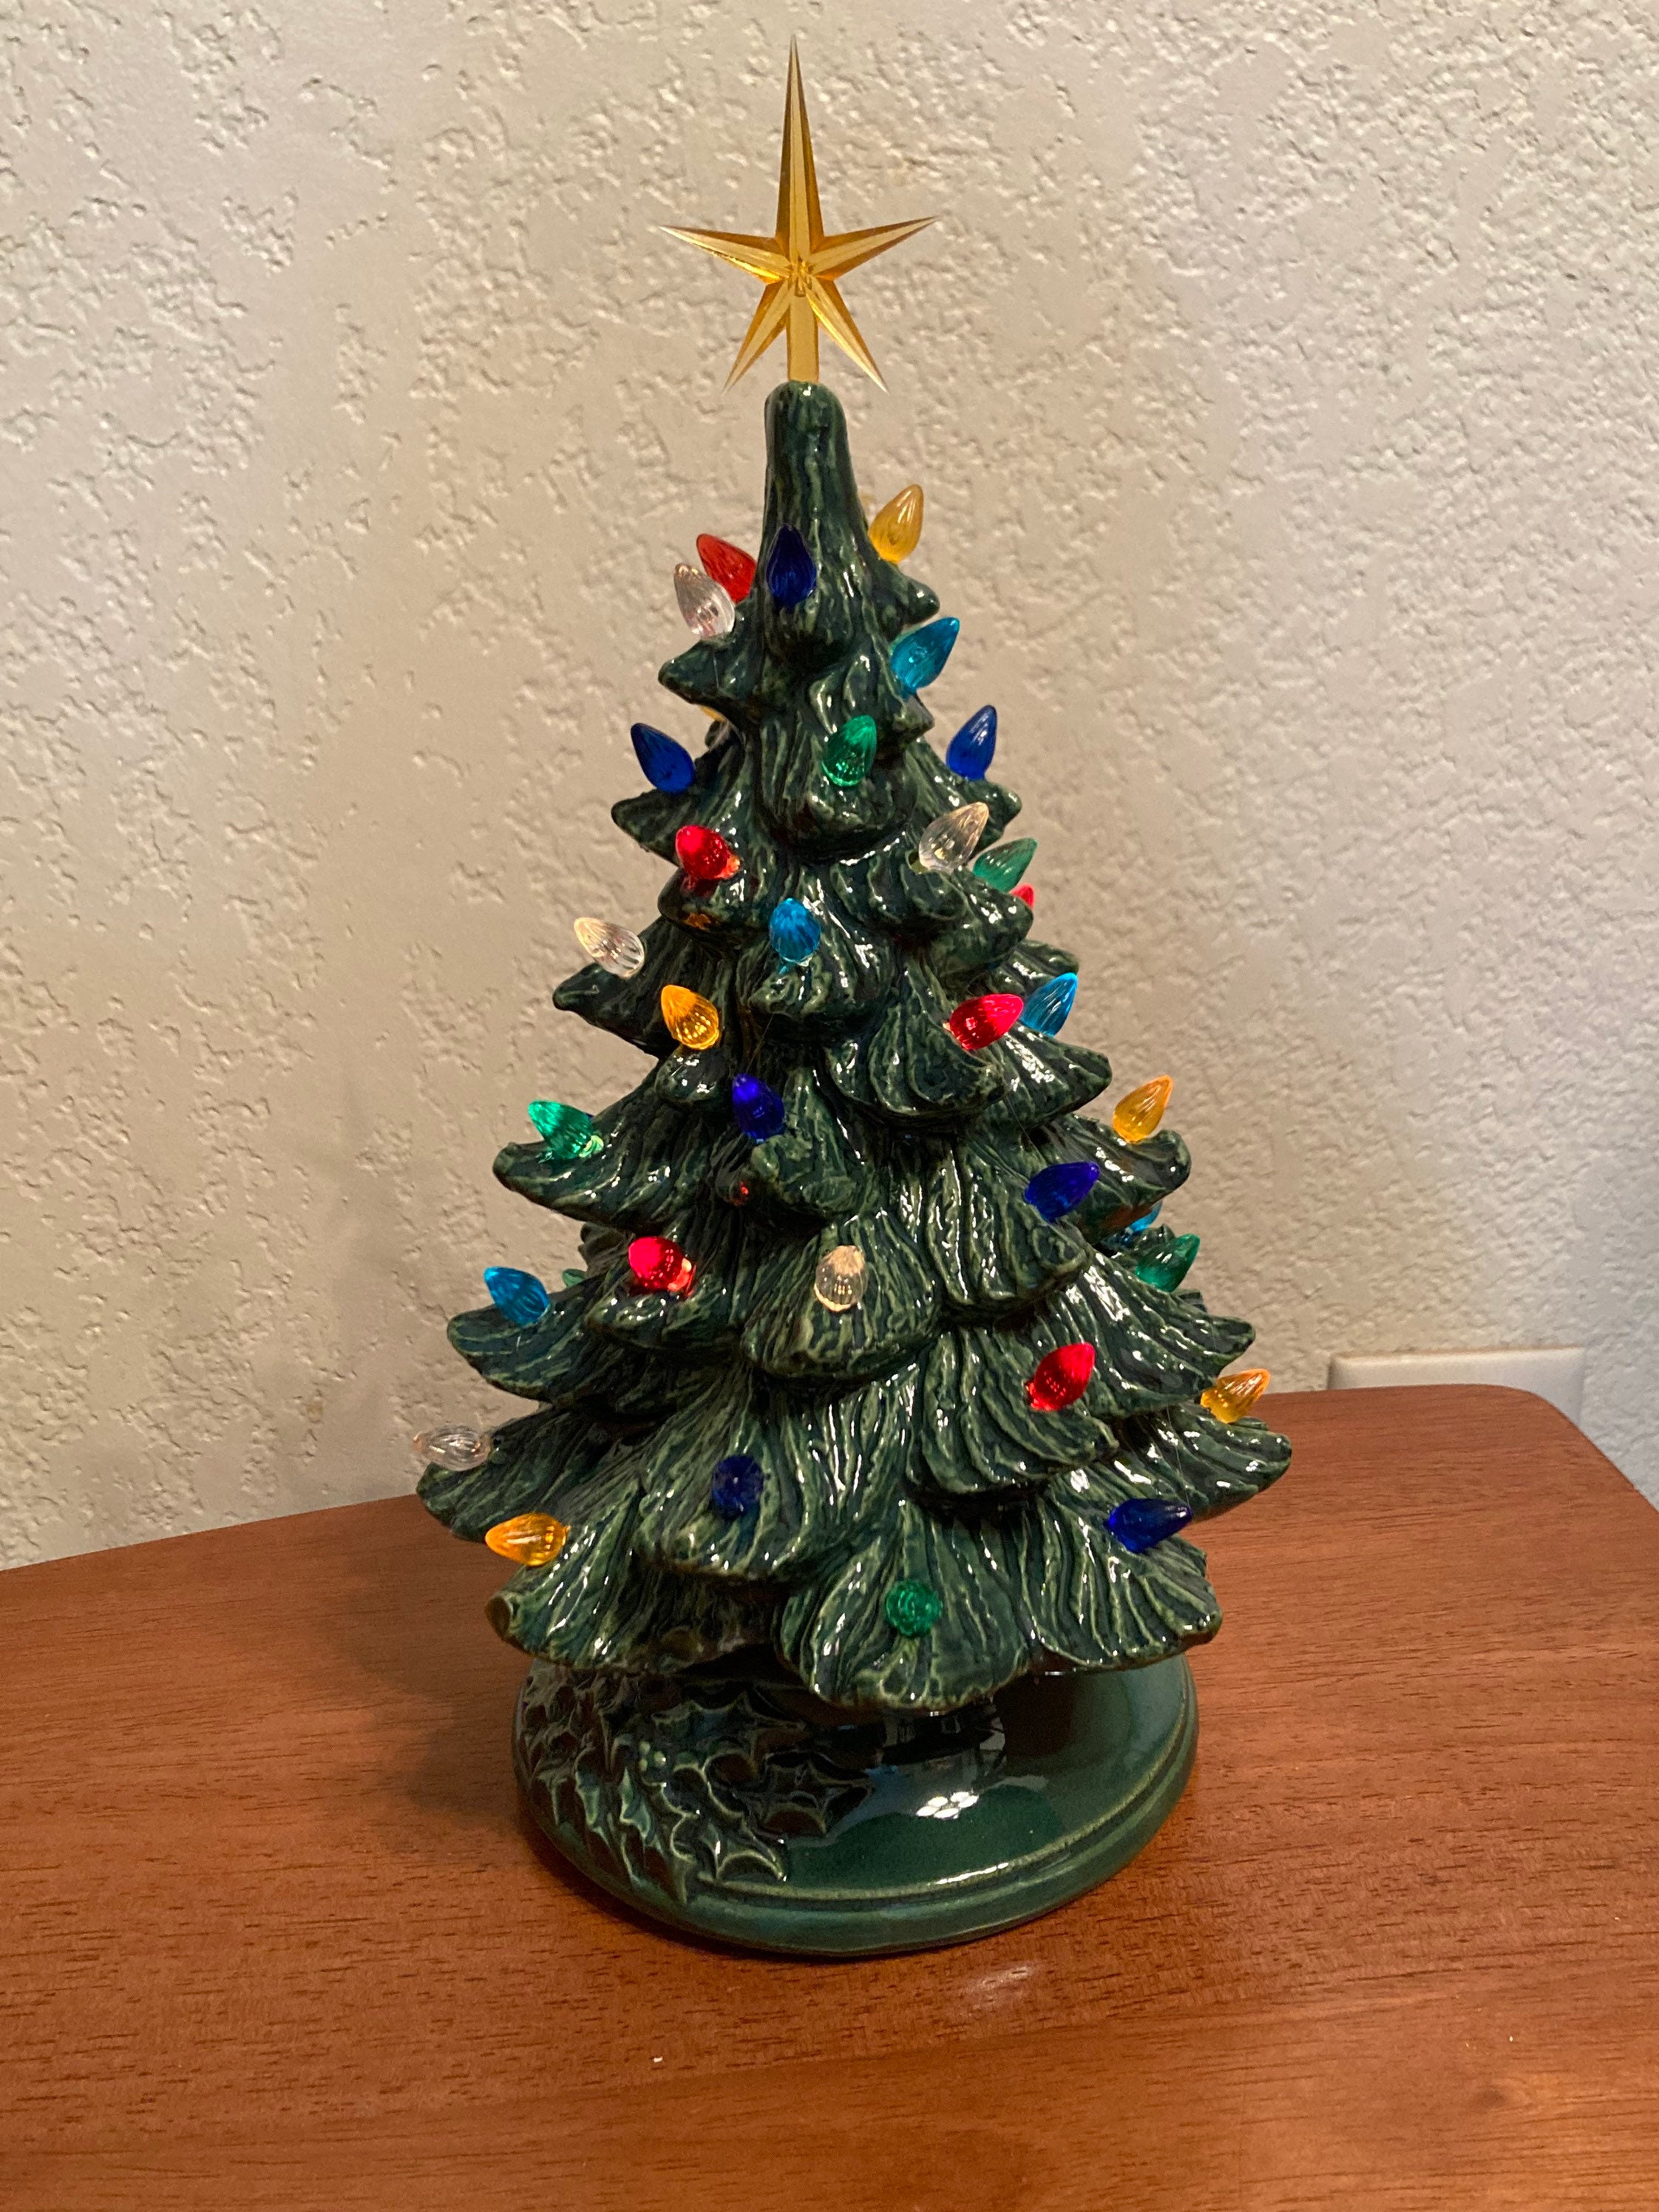 Imitation Ceramic Christmas Tree,Ceramic Christmas Trees That Light Up  ,Vintage Porcelain Christmas Tree with Lights for Christmas and Home